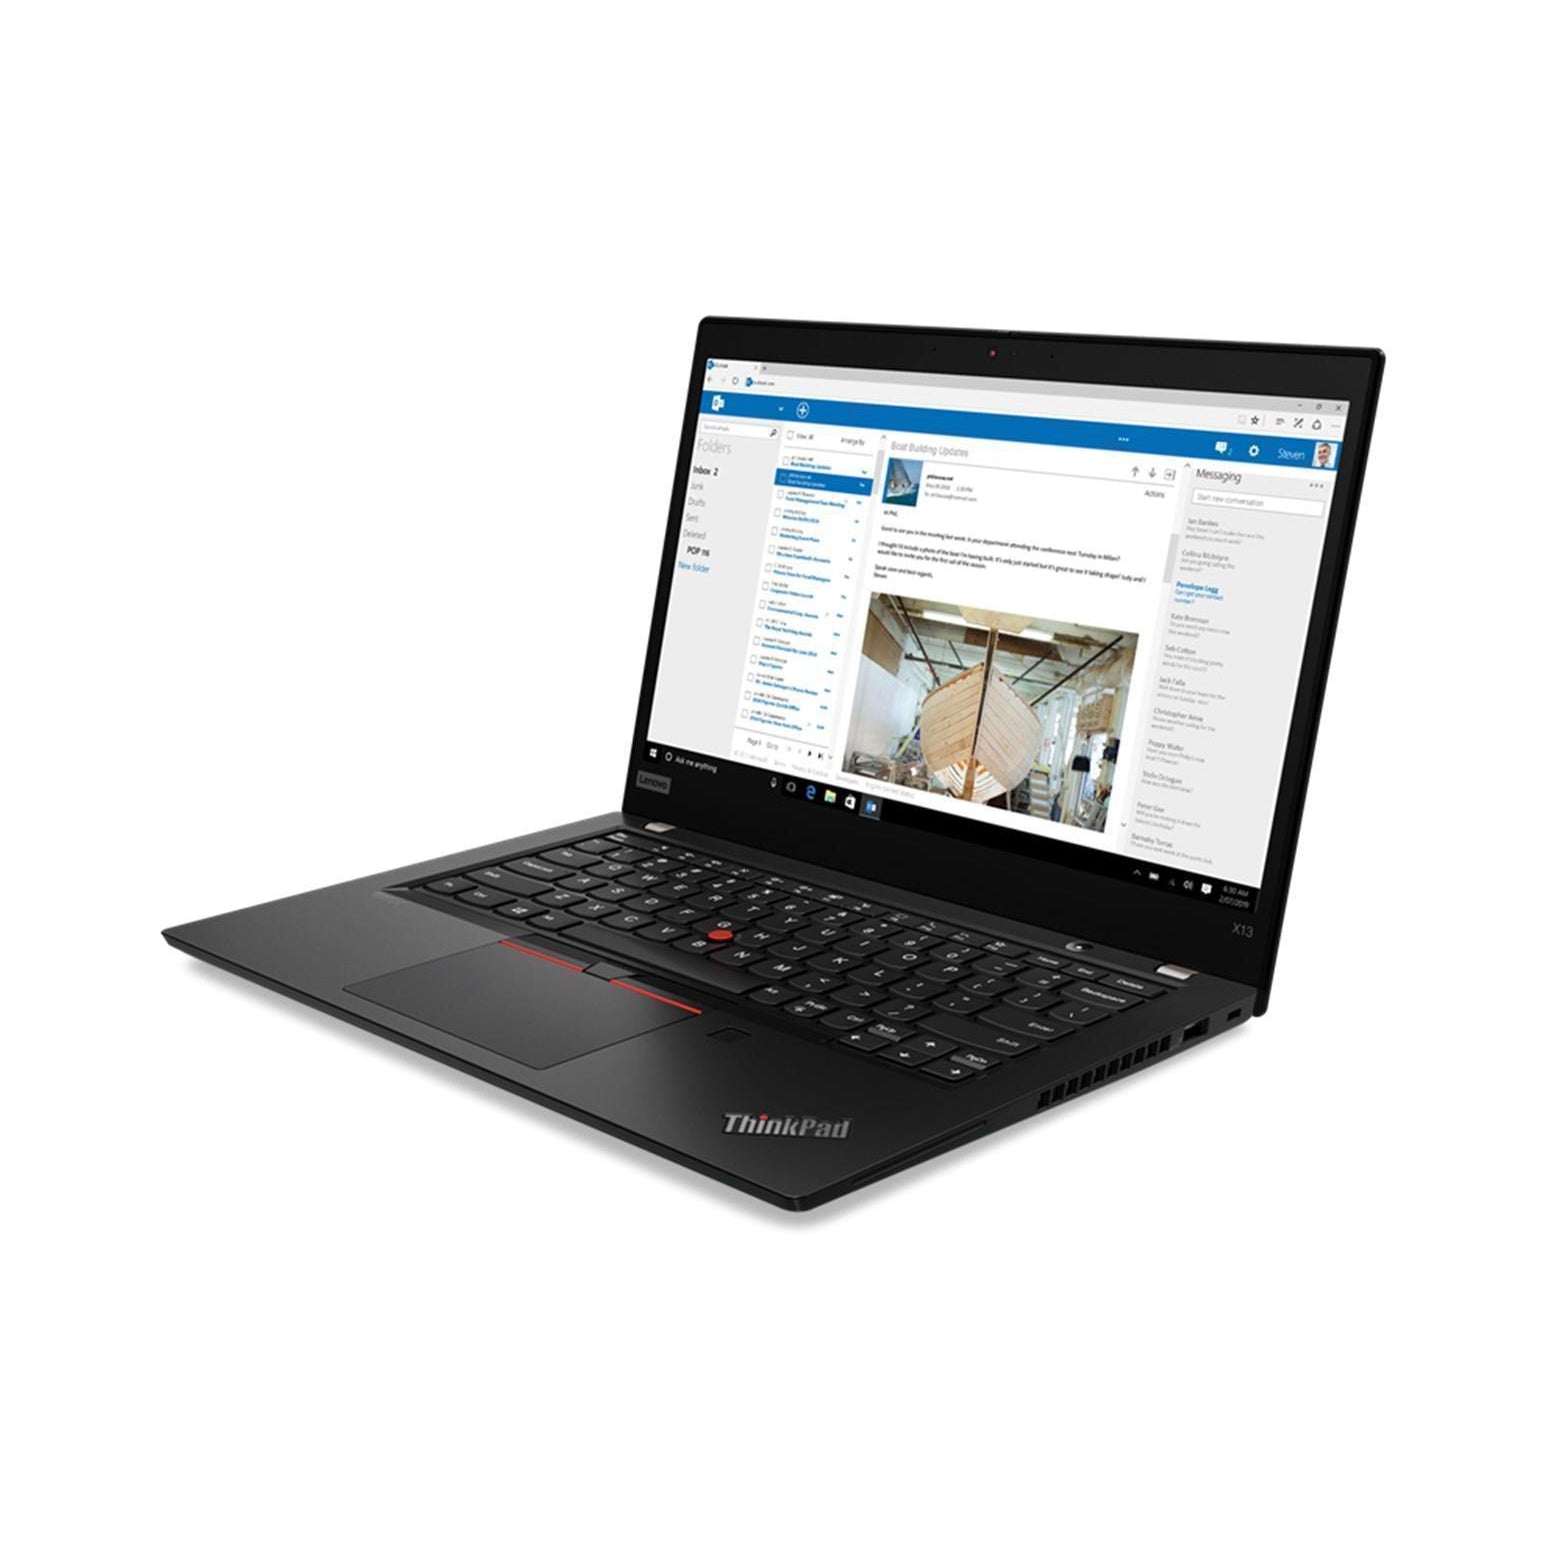 Lenovo ThinkPad 13 2nd Gen, Intel i5, 128GB, Black - Excellent